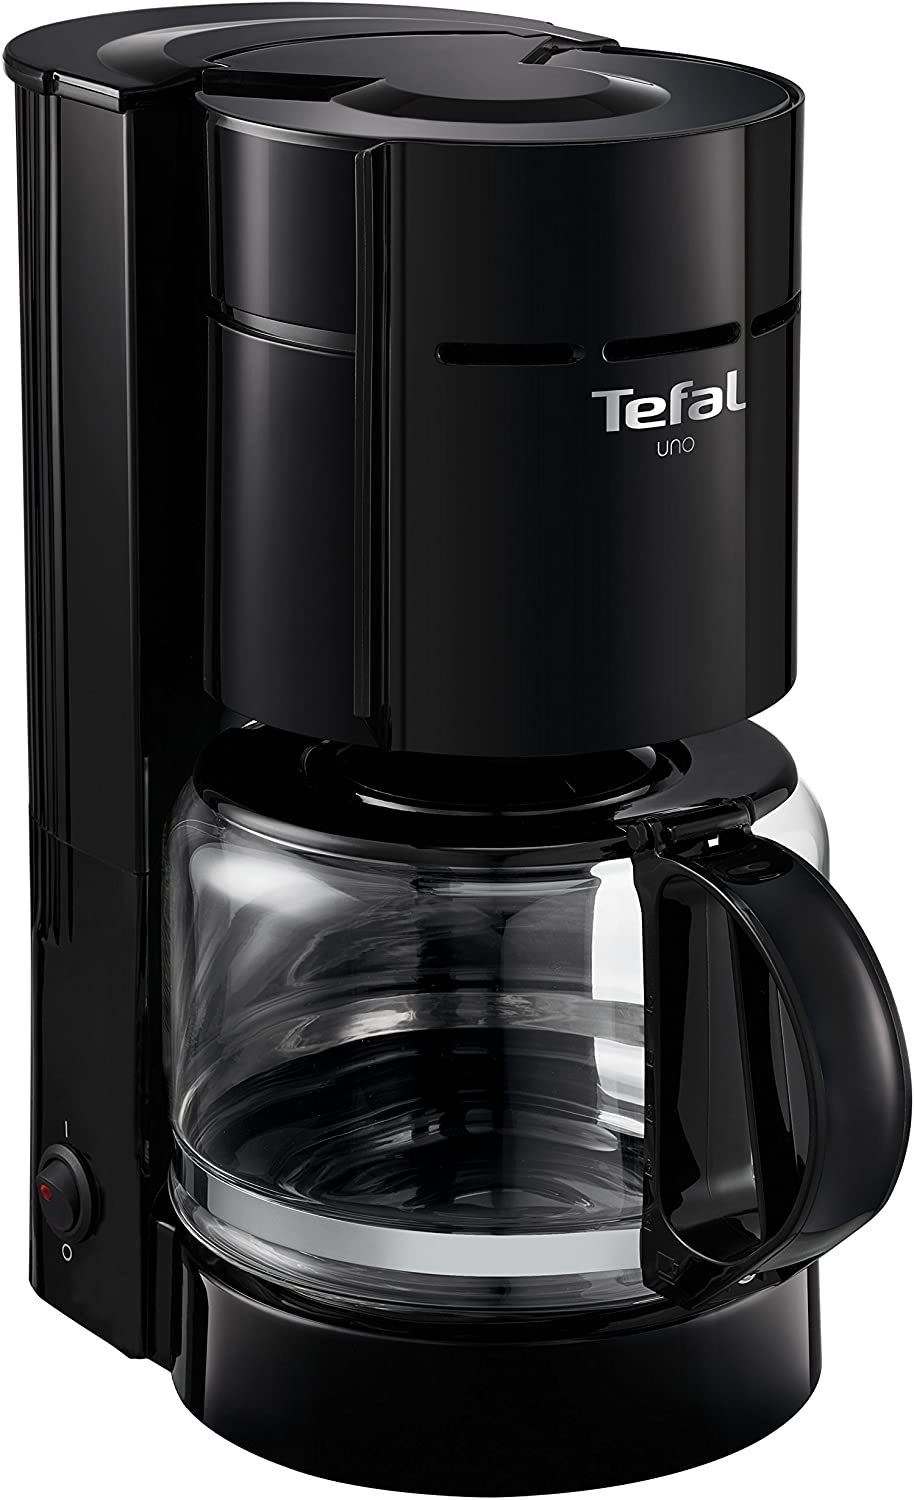 Tefal Uno CM1218 Filter Coffee Machine 1.1 Litres Black